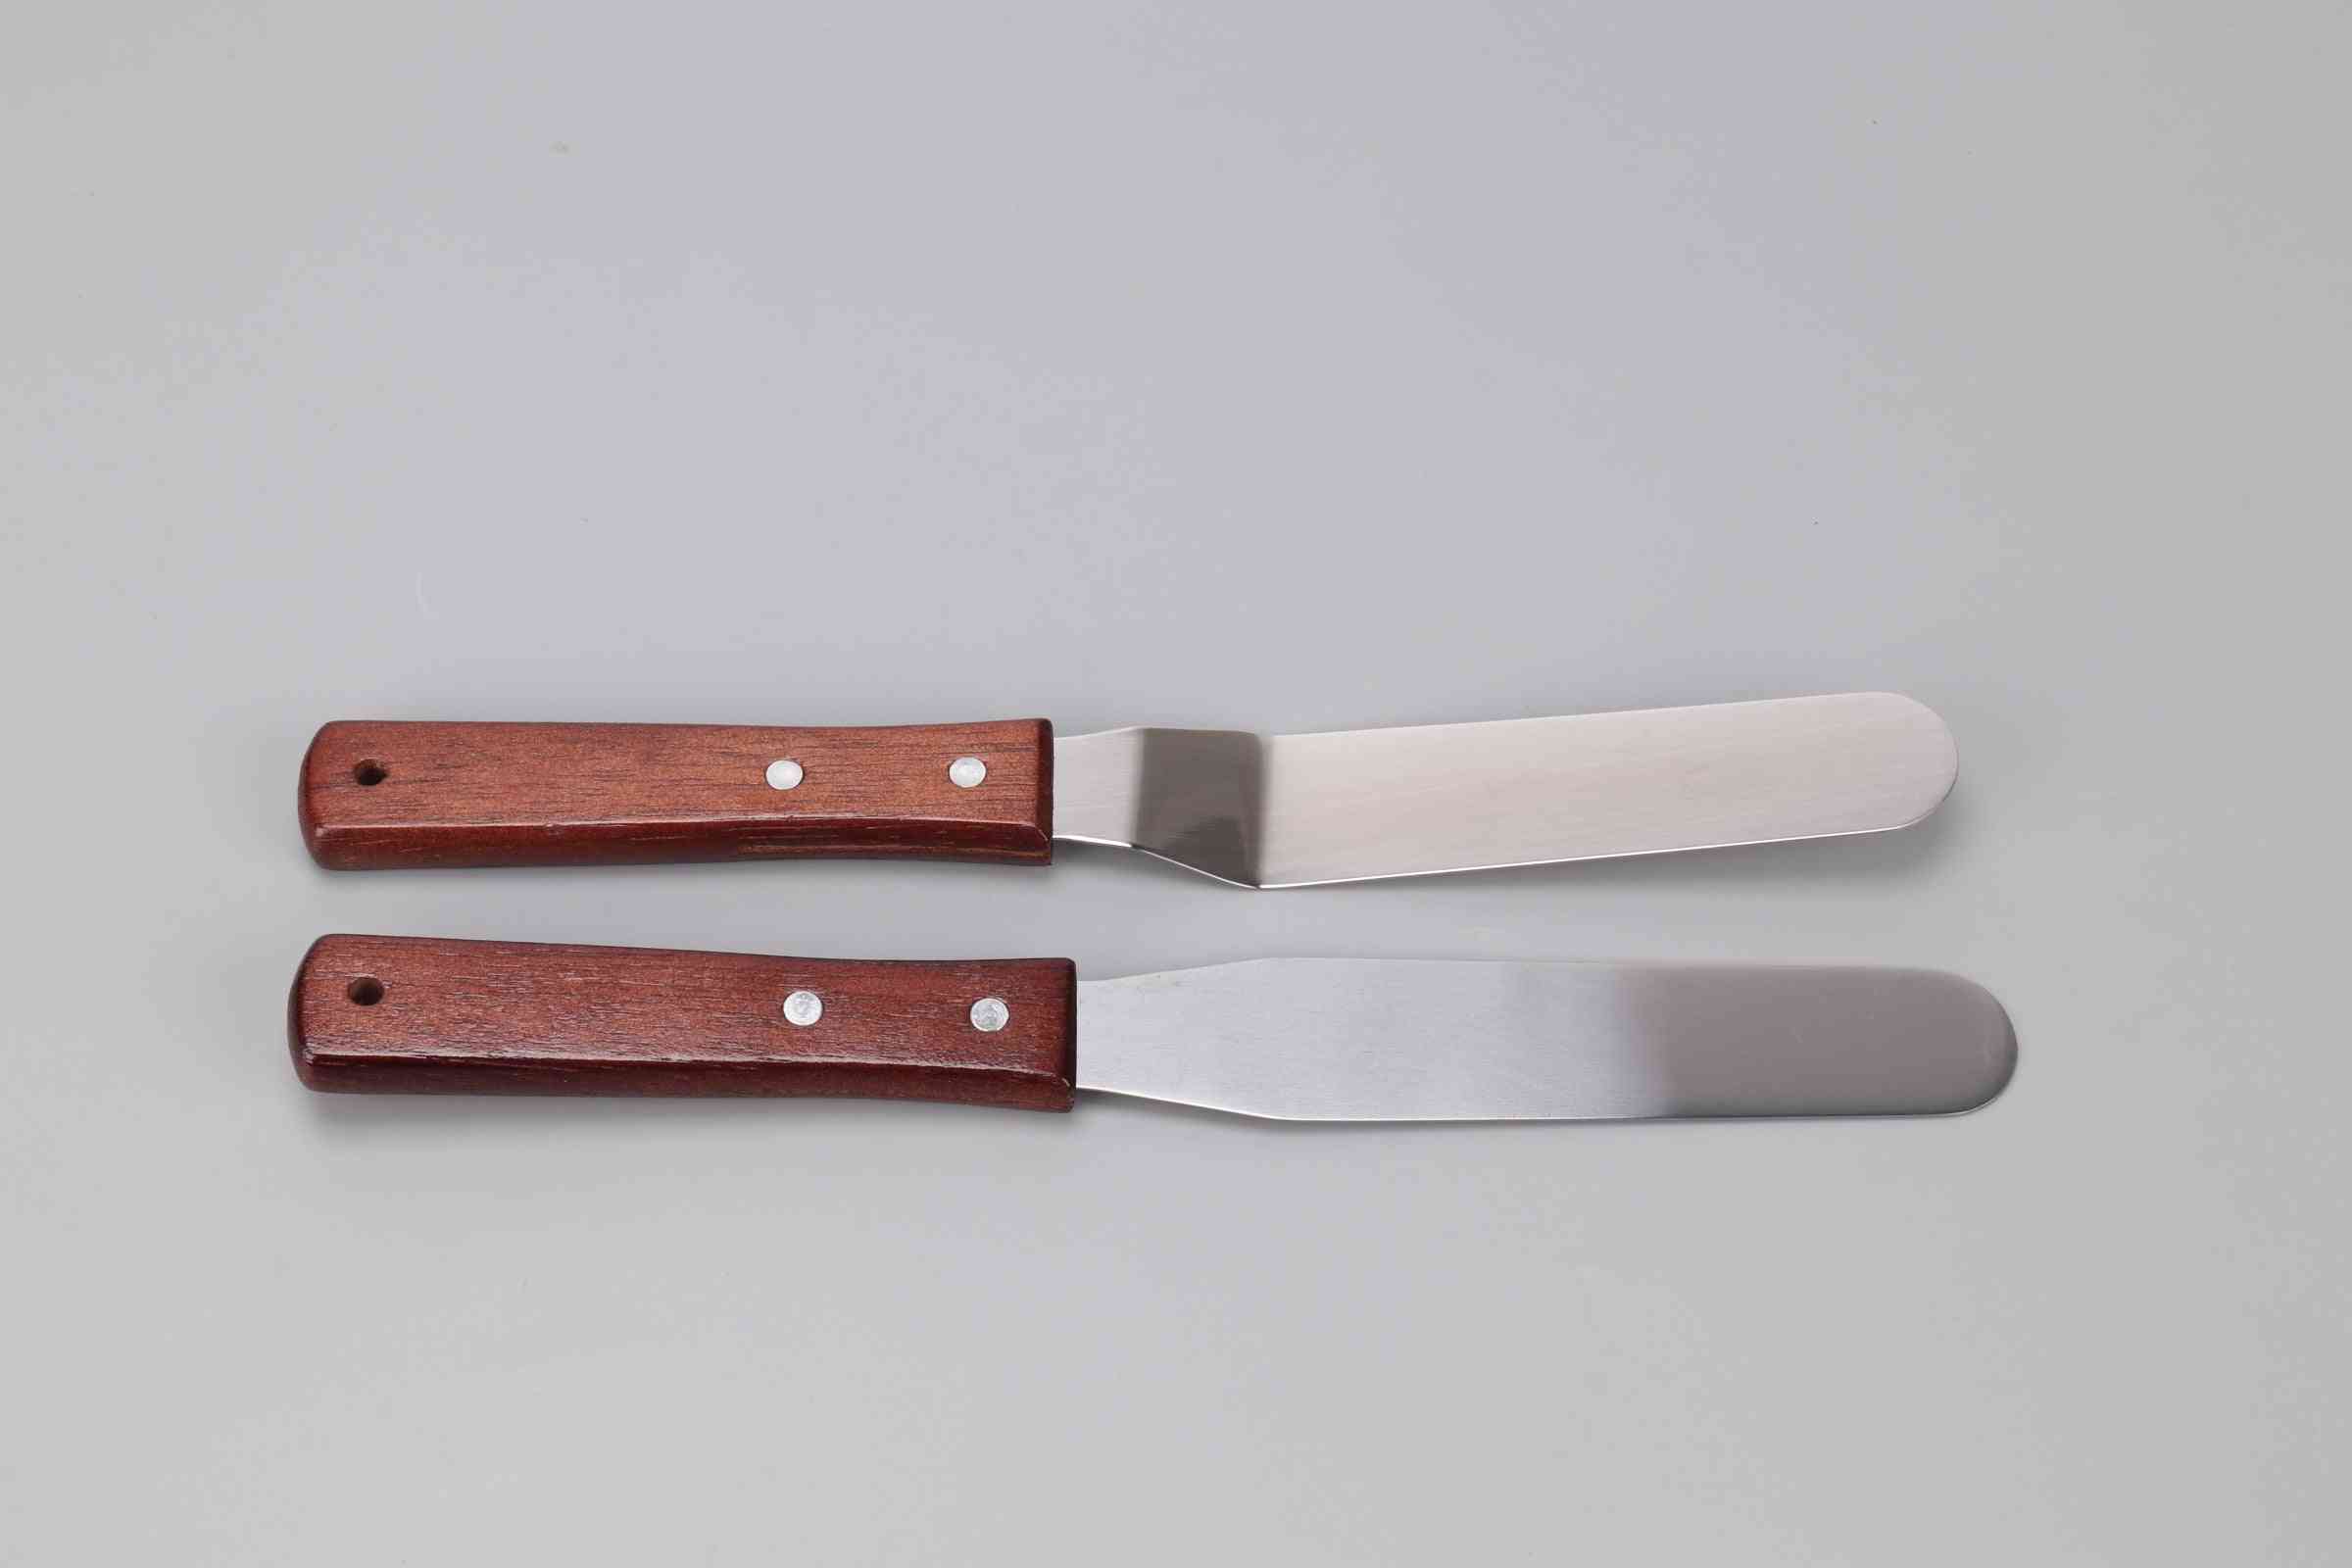 6 Stück Backspatel Teigmesser Silikon Werkzeugset für Lebensmittelqualität, Dekoration, Gebäck Kammglasur glatter